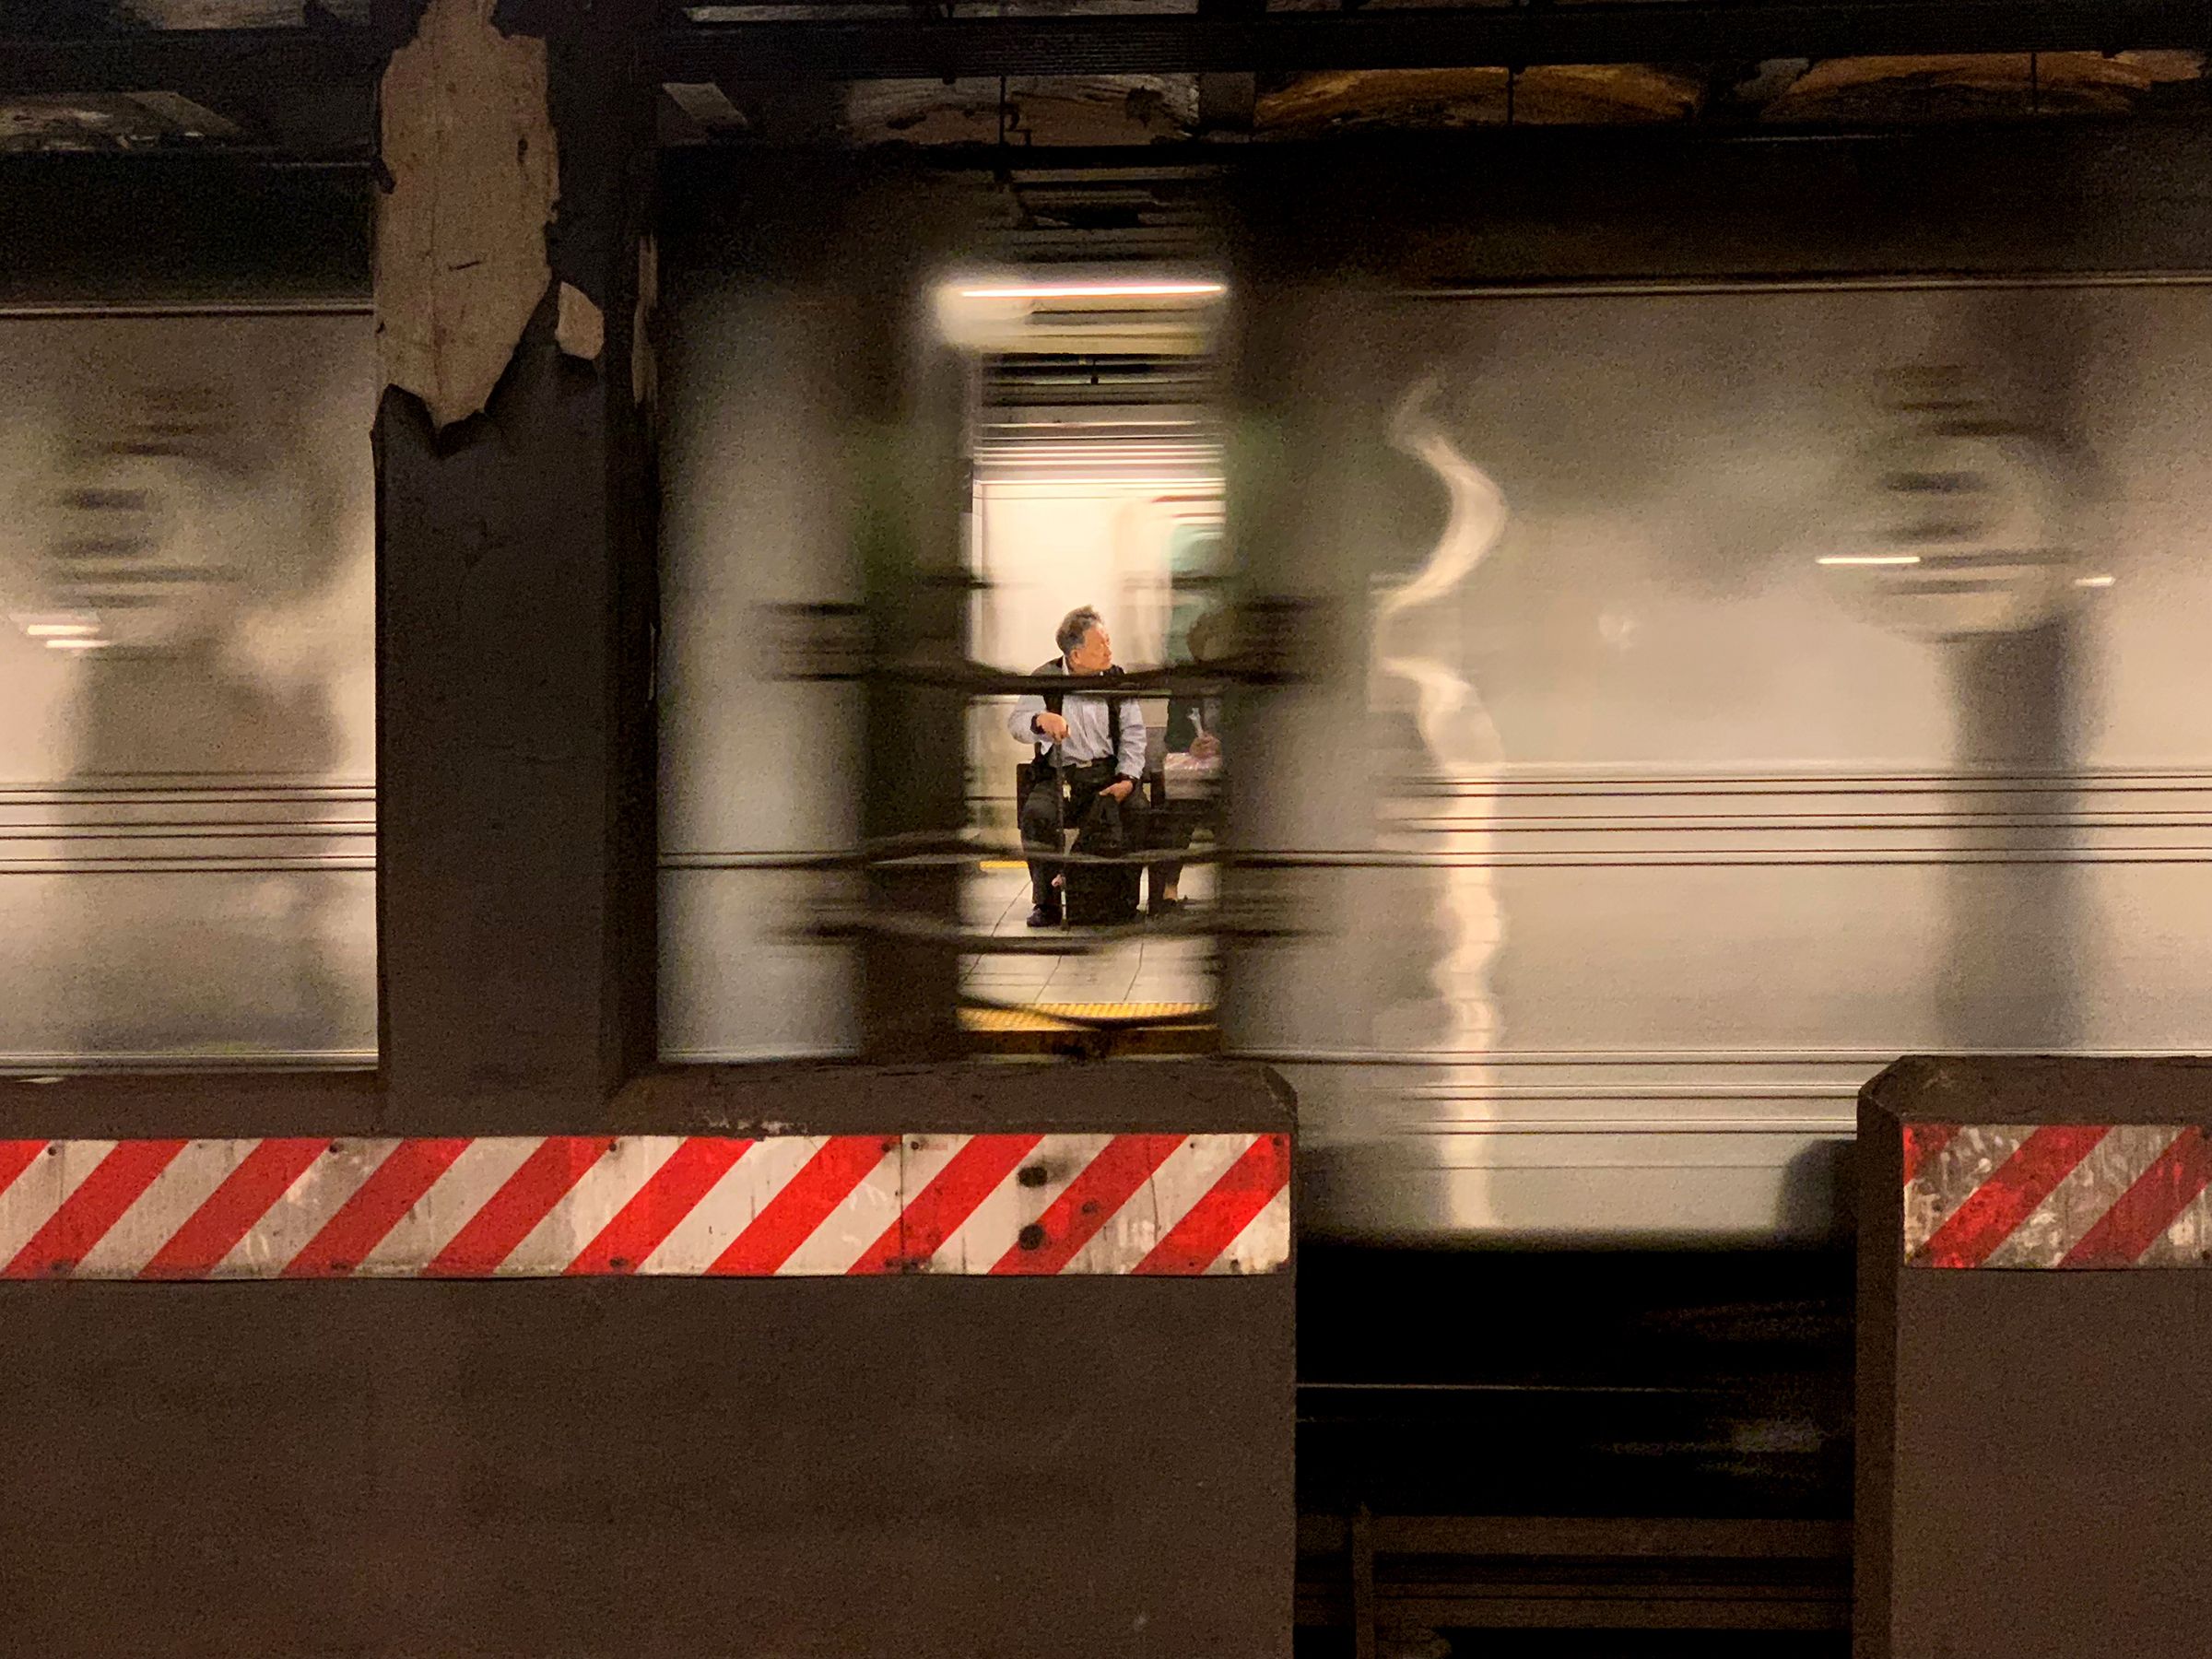 009__NYC-Subway_04_10x10in_ColorPrint_2018.jpg